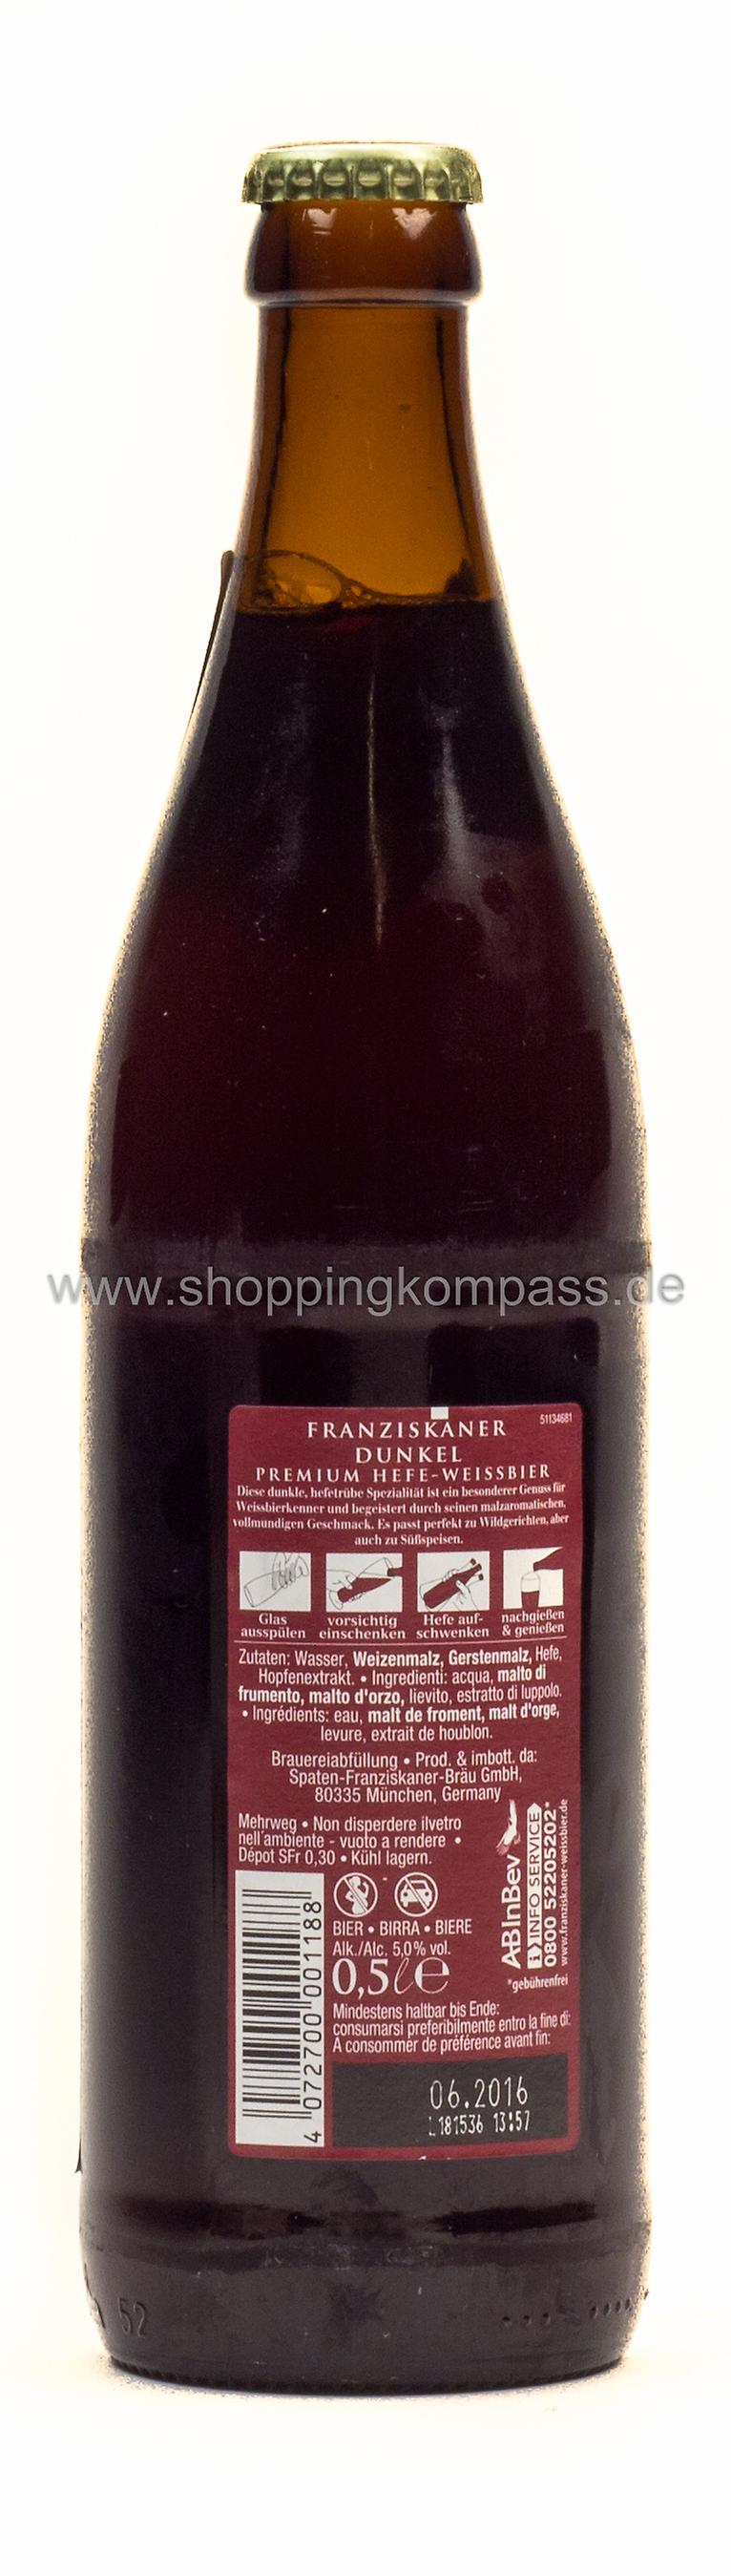 Franziskaner Weissbier Hefeweizen Dunkel Kasten 20 x 0,5 l Glas Mehrweg